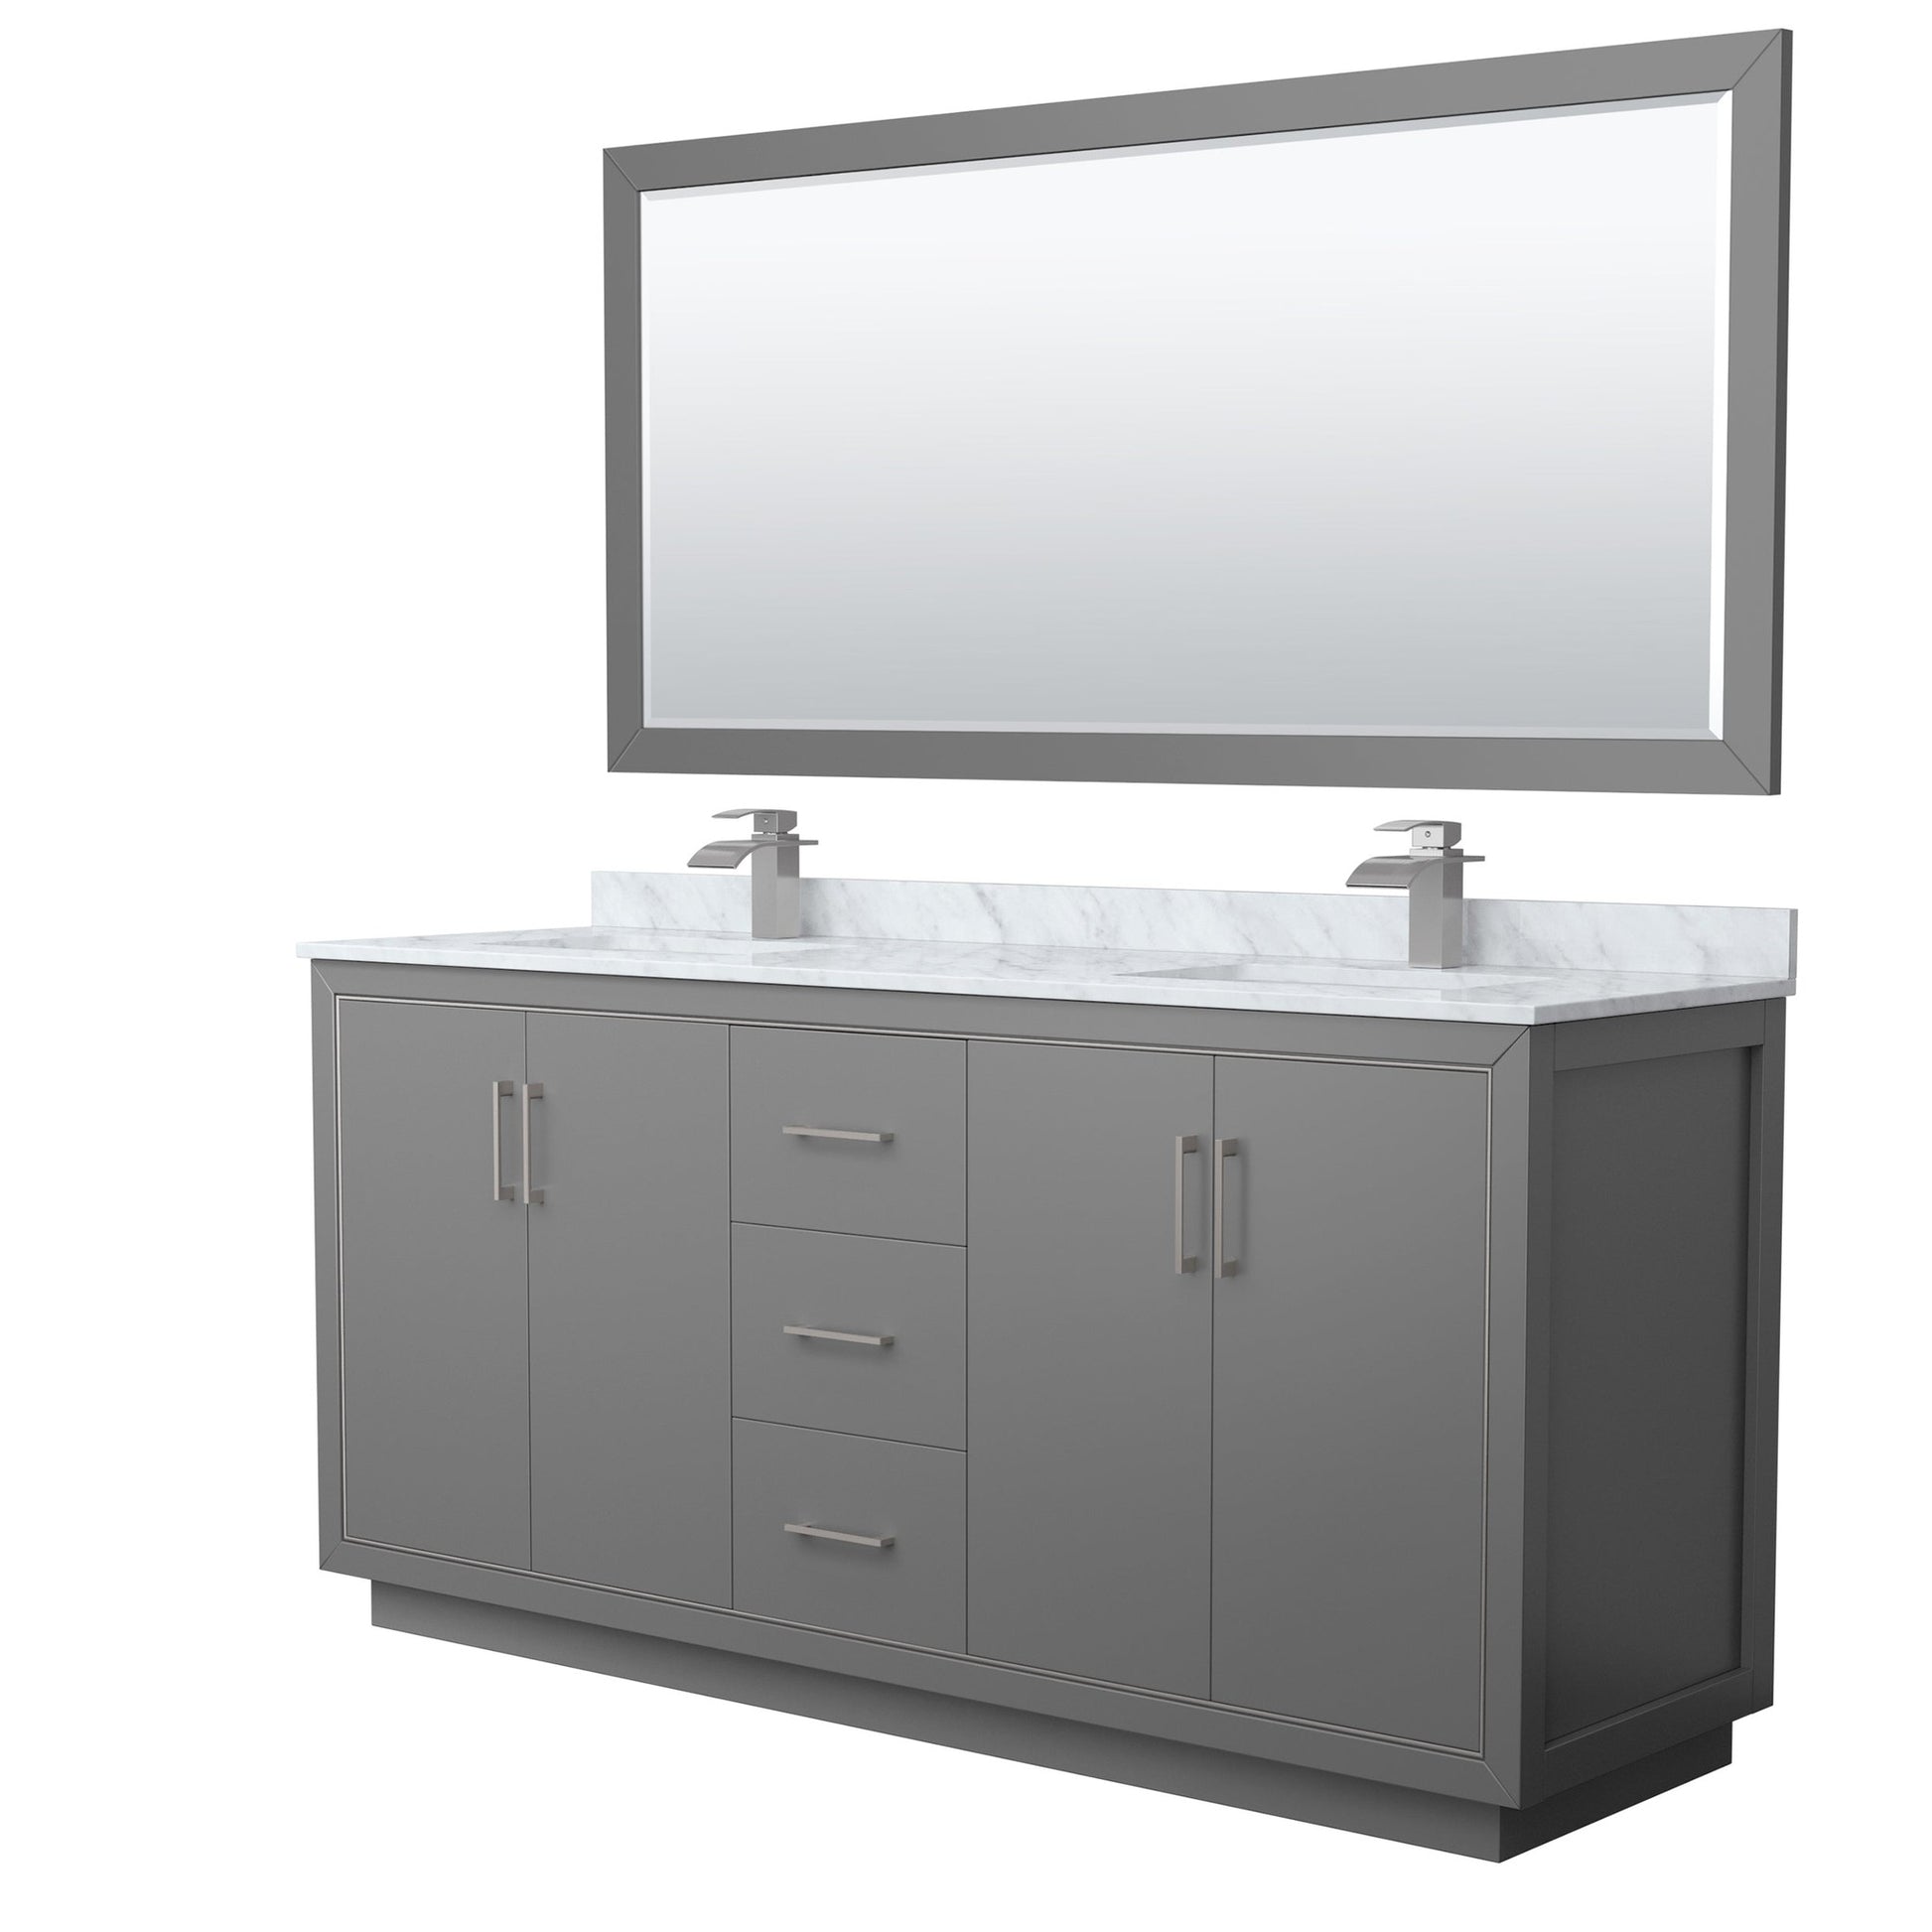 Wyndham Collection Icon 72" Double Bathroom Vanity in Dark Gray, White Carrara Marble Countertop, Undermount Square Sinks, Brushed Nickel Trim, 70" Mirror